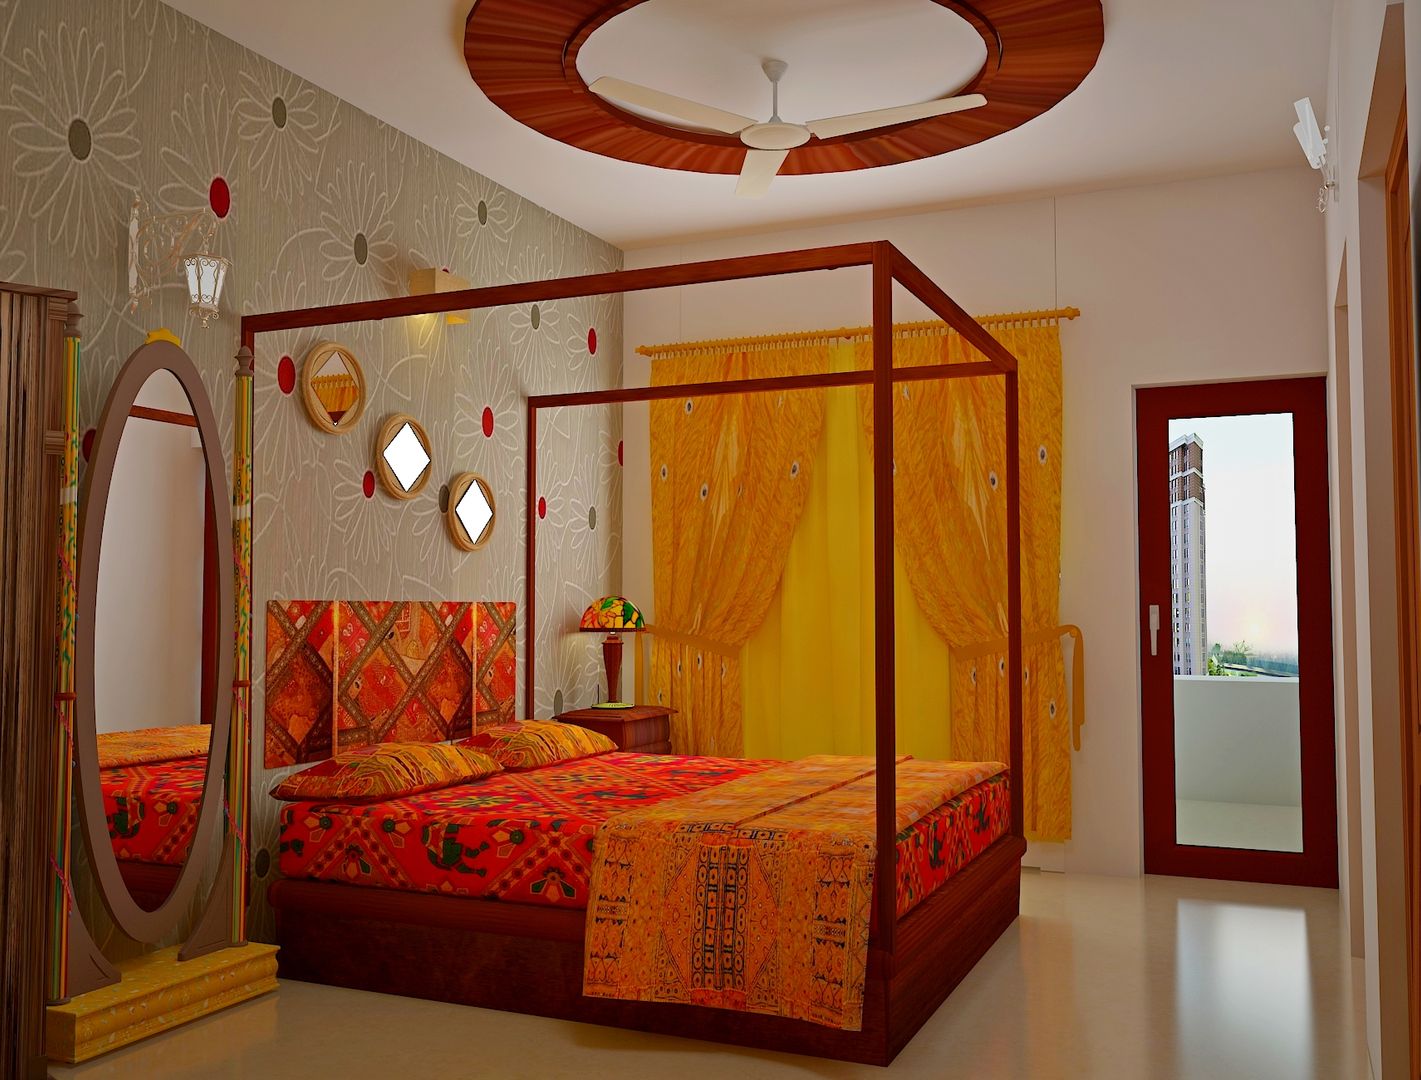 SJR Watermark, 3 BHK - Mr. Ankit, DECOR DREAMS DECOR DREAMS Modern style bedroom